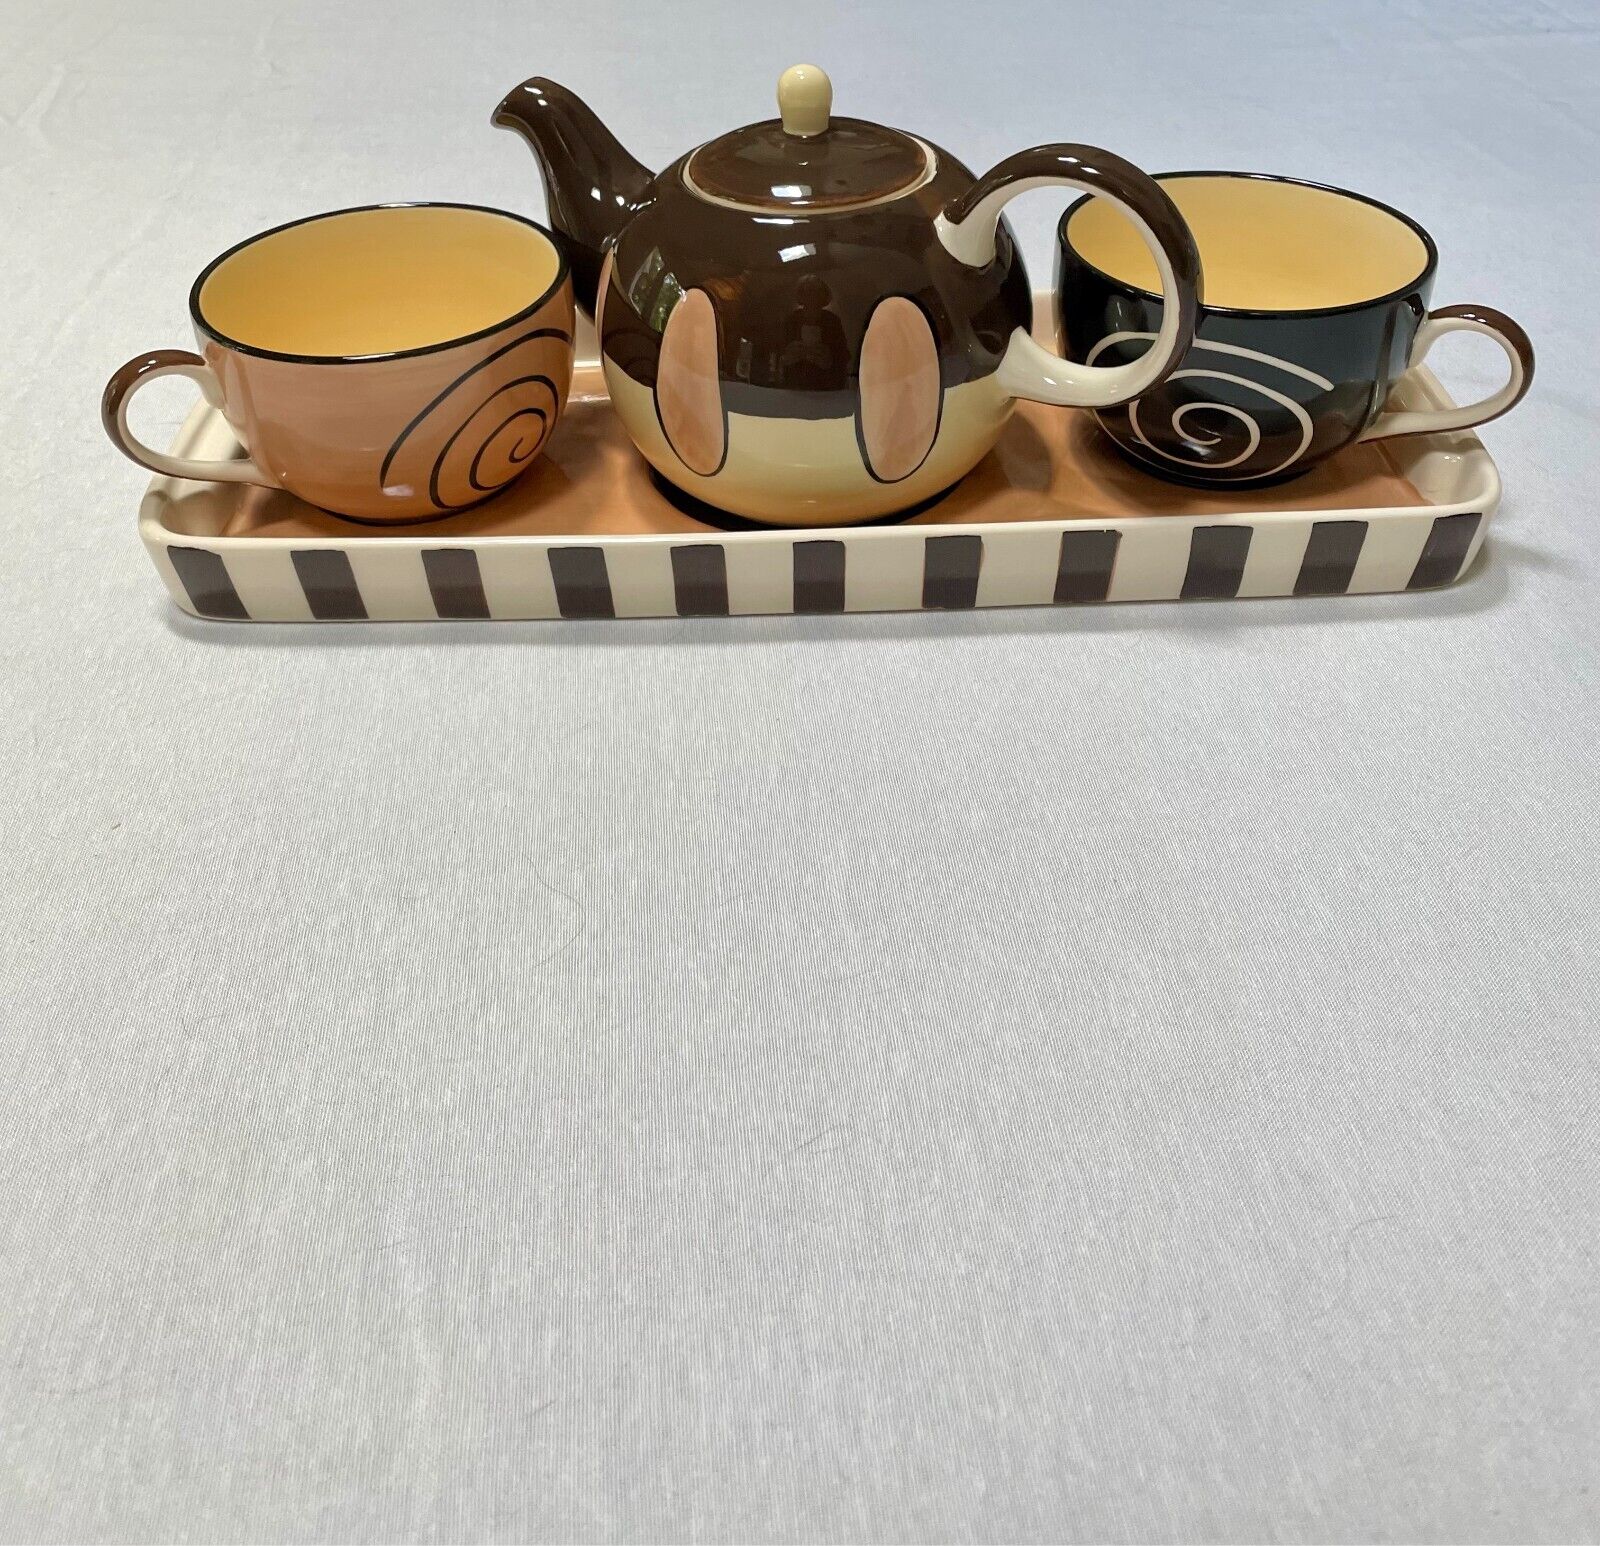 Vintage Hues 'n Brews Retro Abstract Tea Pot, Teacups, & Tray SET Brown and Tan